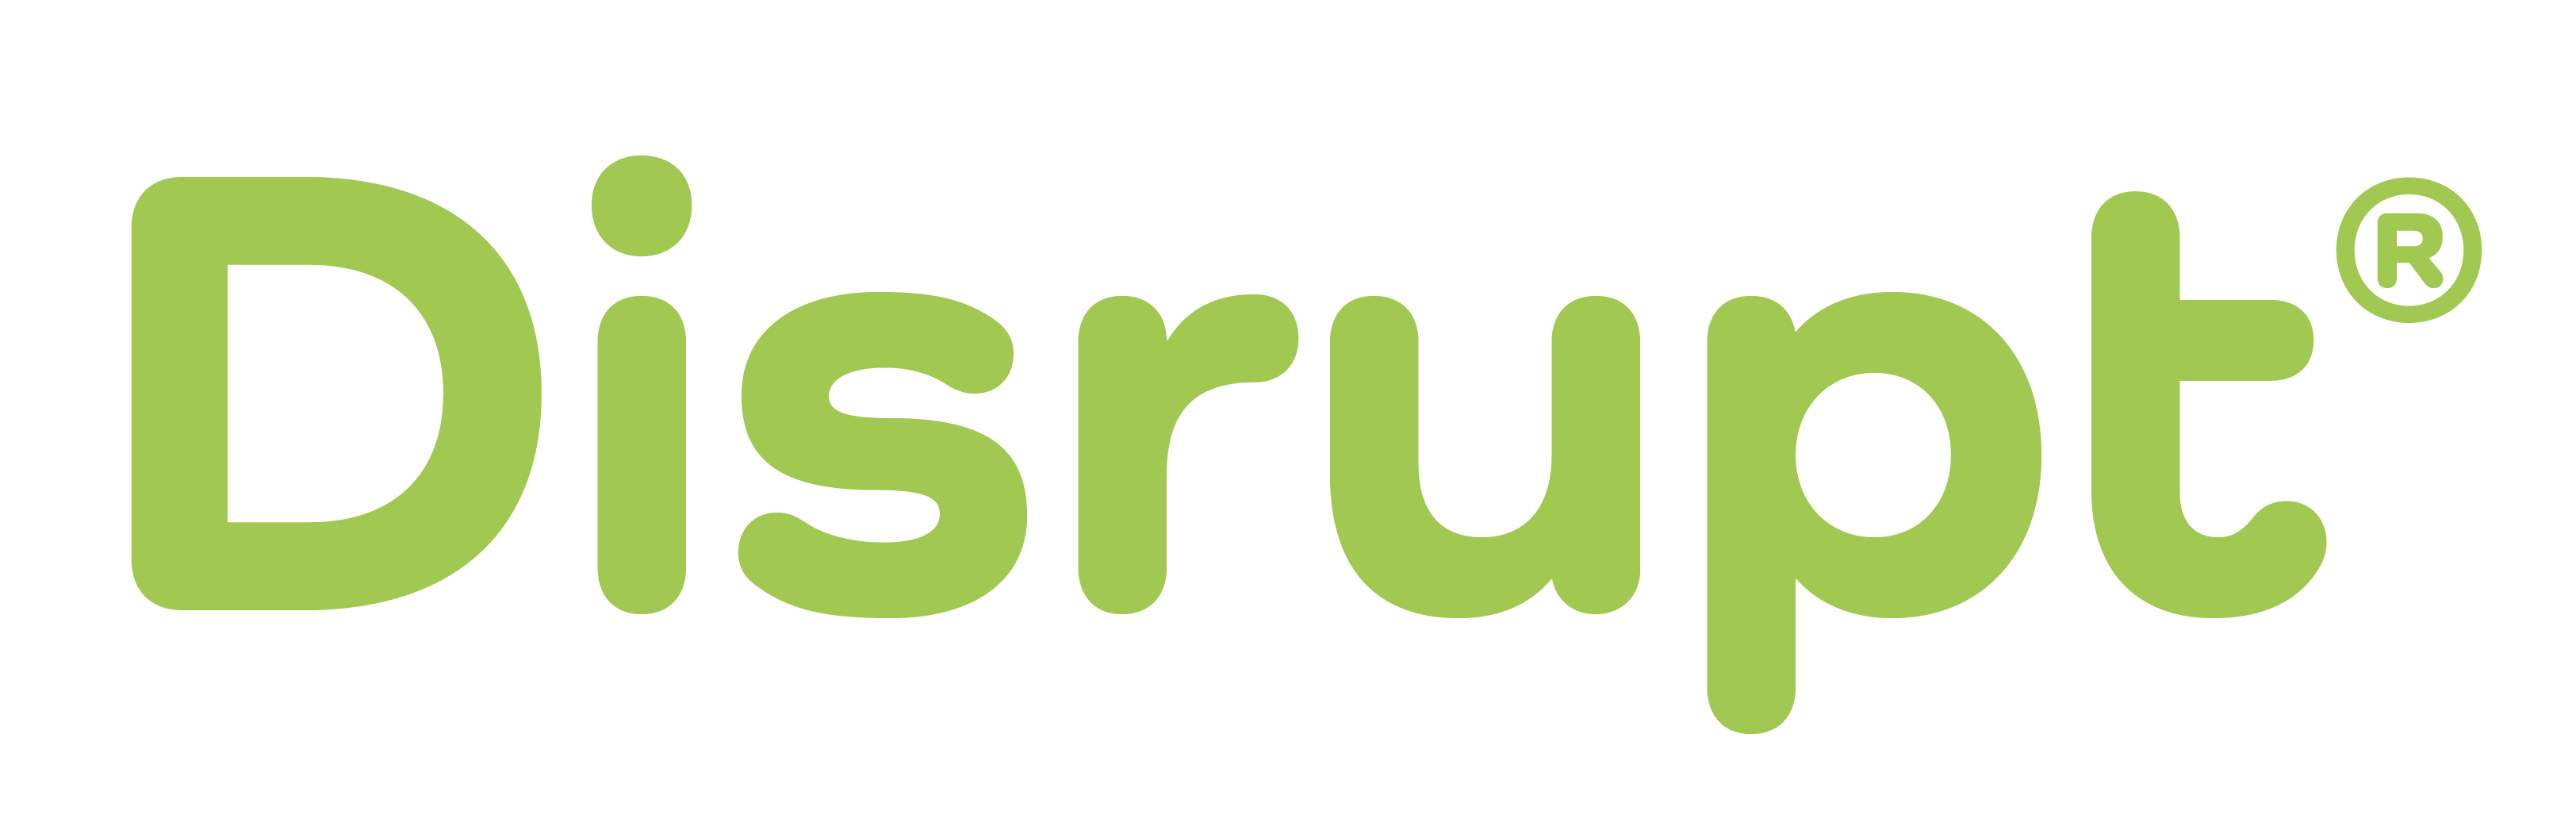 Logo ddisrupt en verde